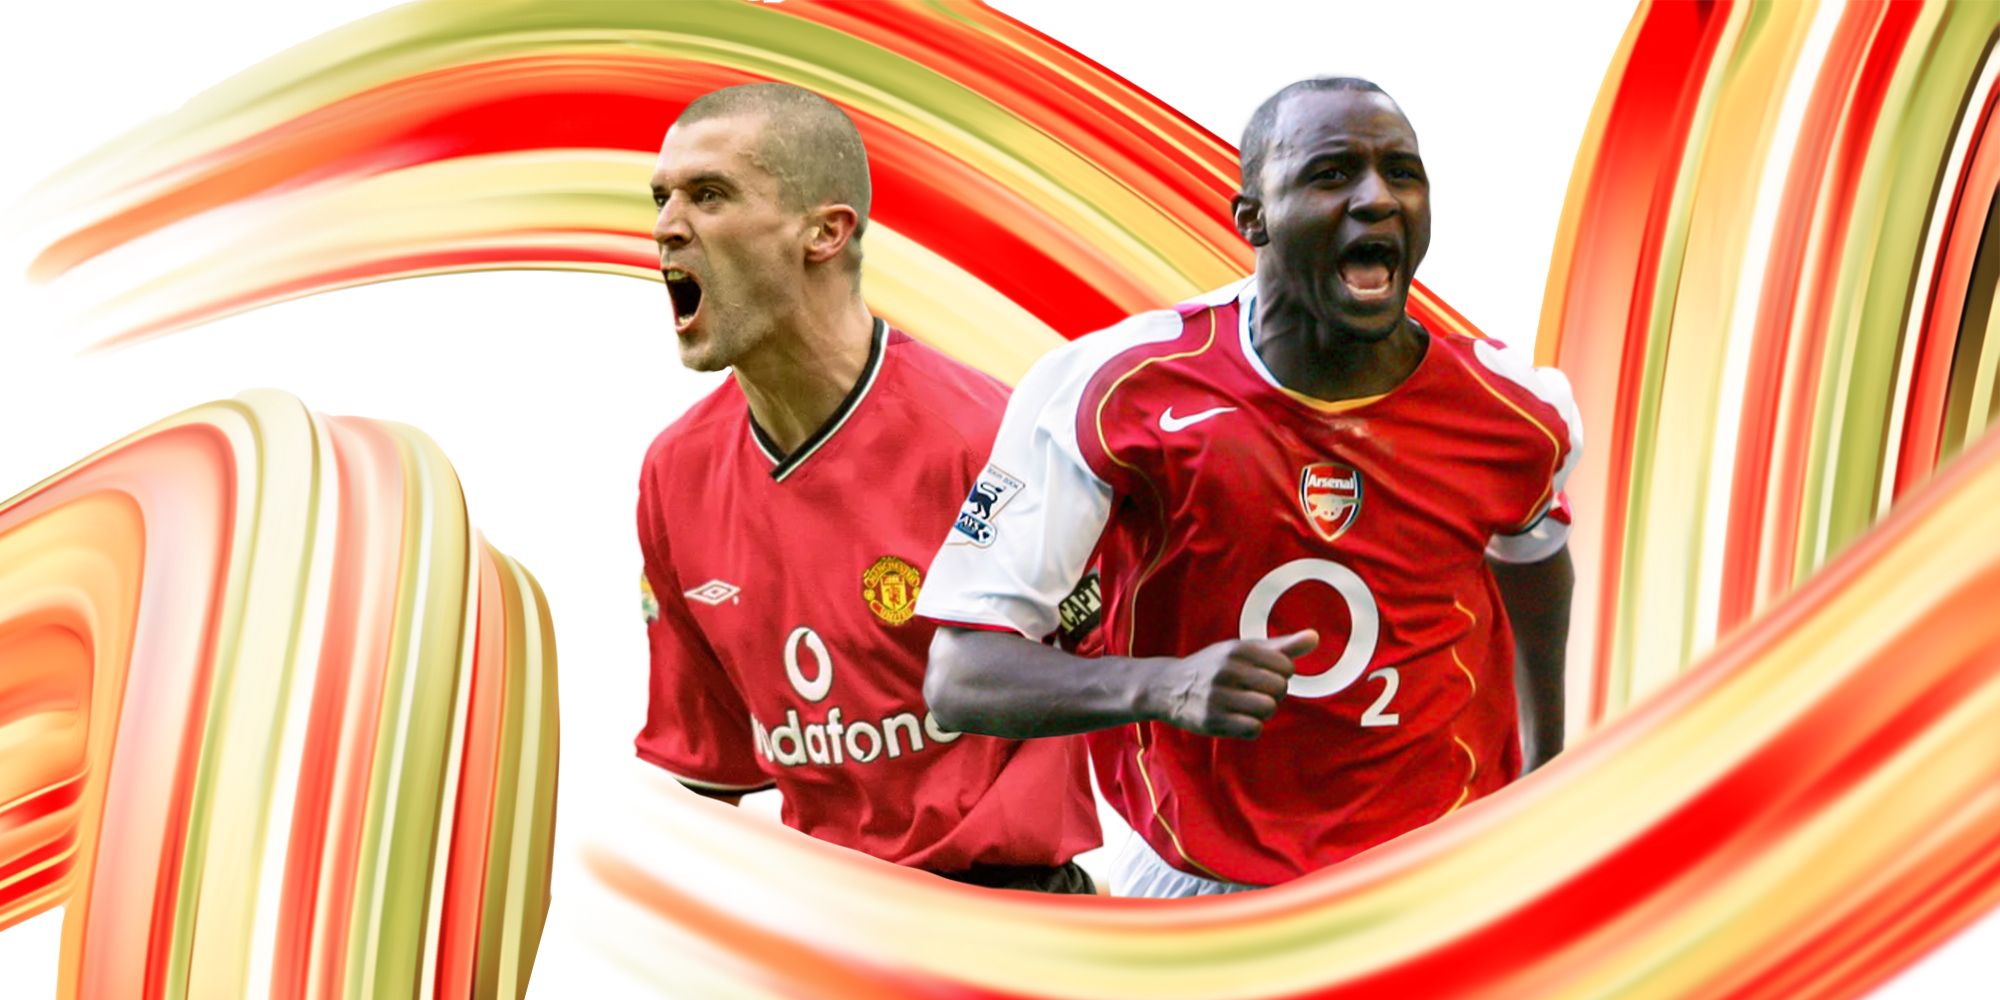 The-21-hardest-footballers-of-the-Premier-League-era-ranked-ft-Keane-image-2